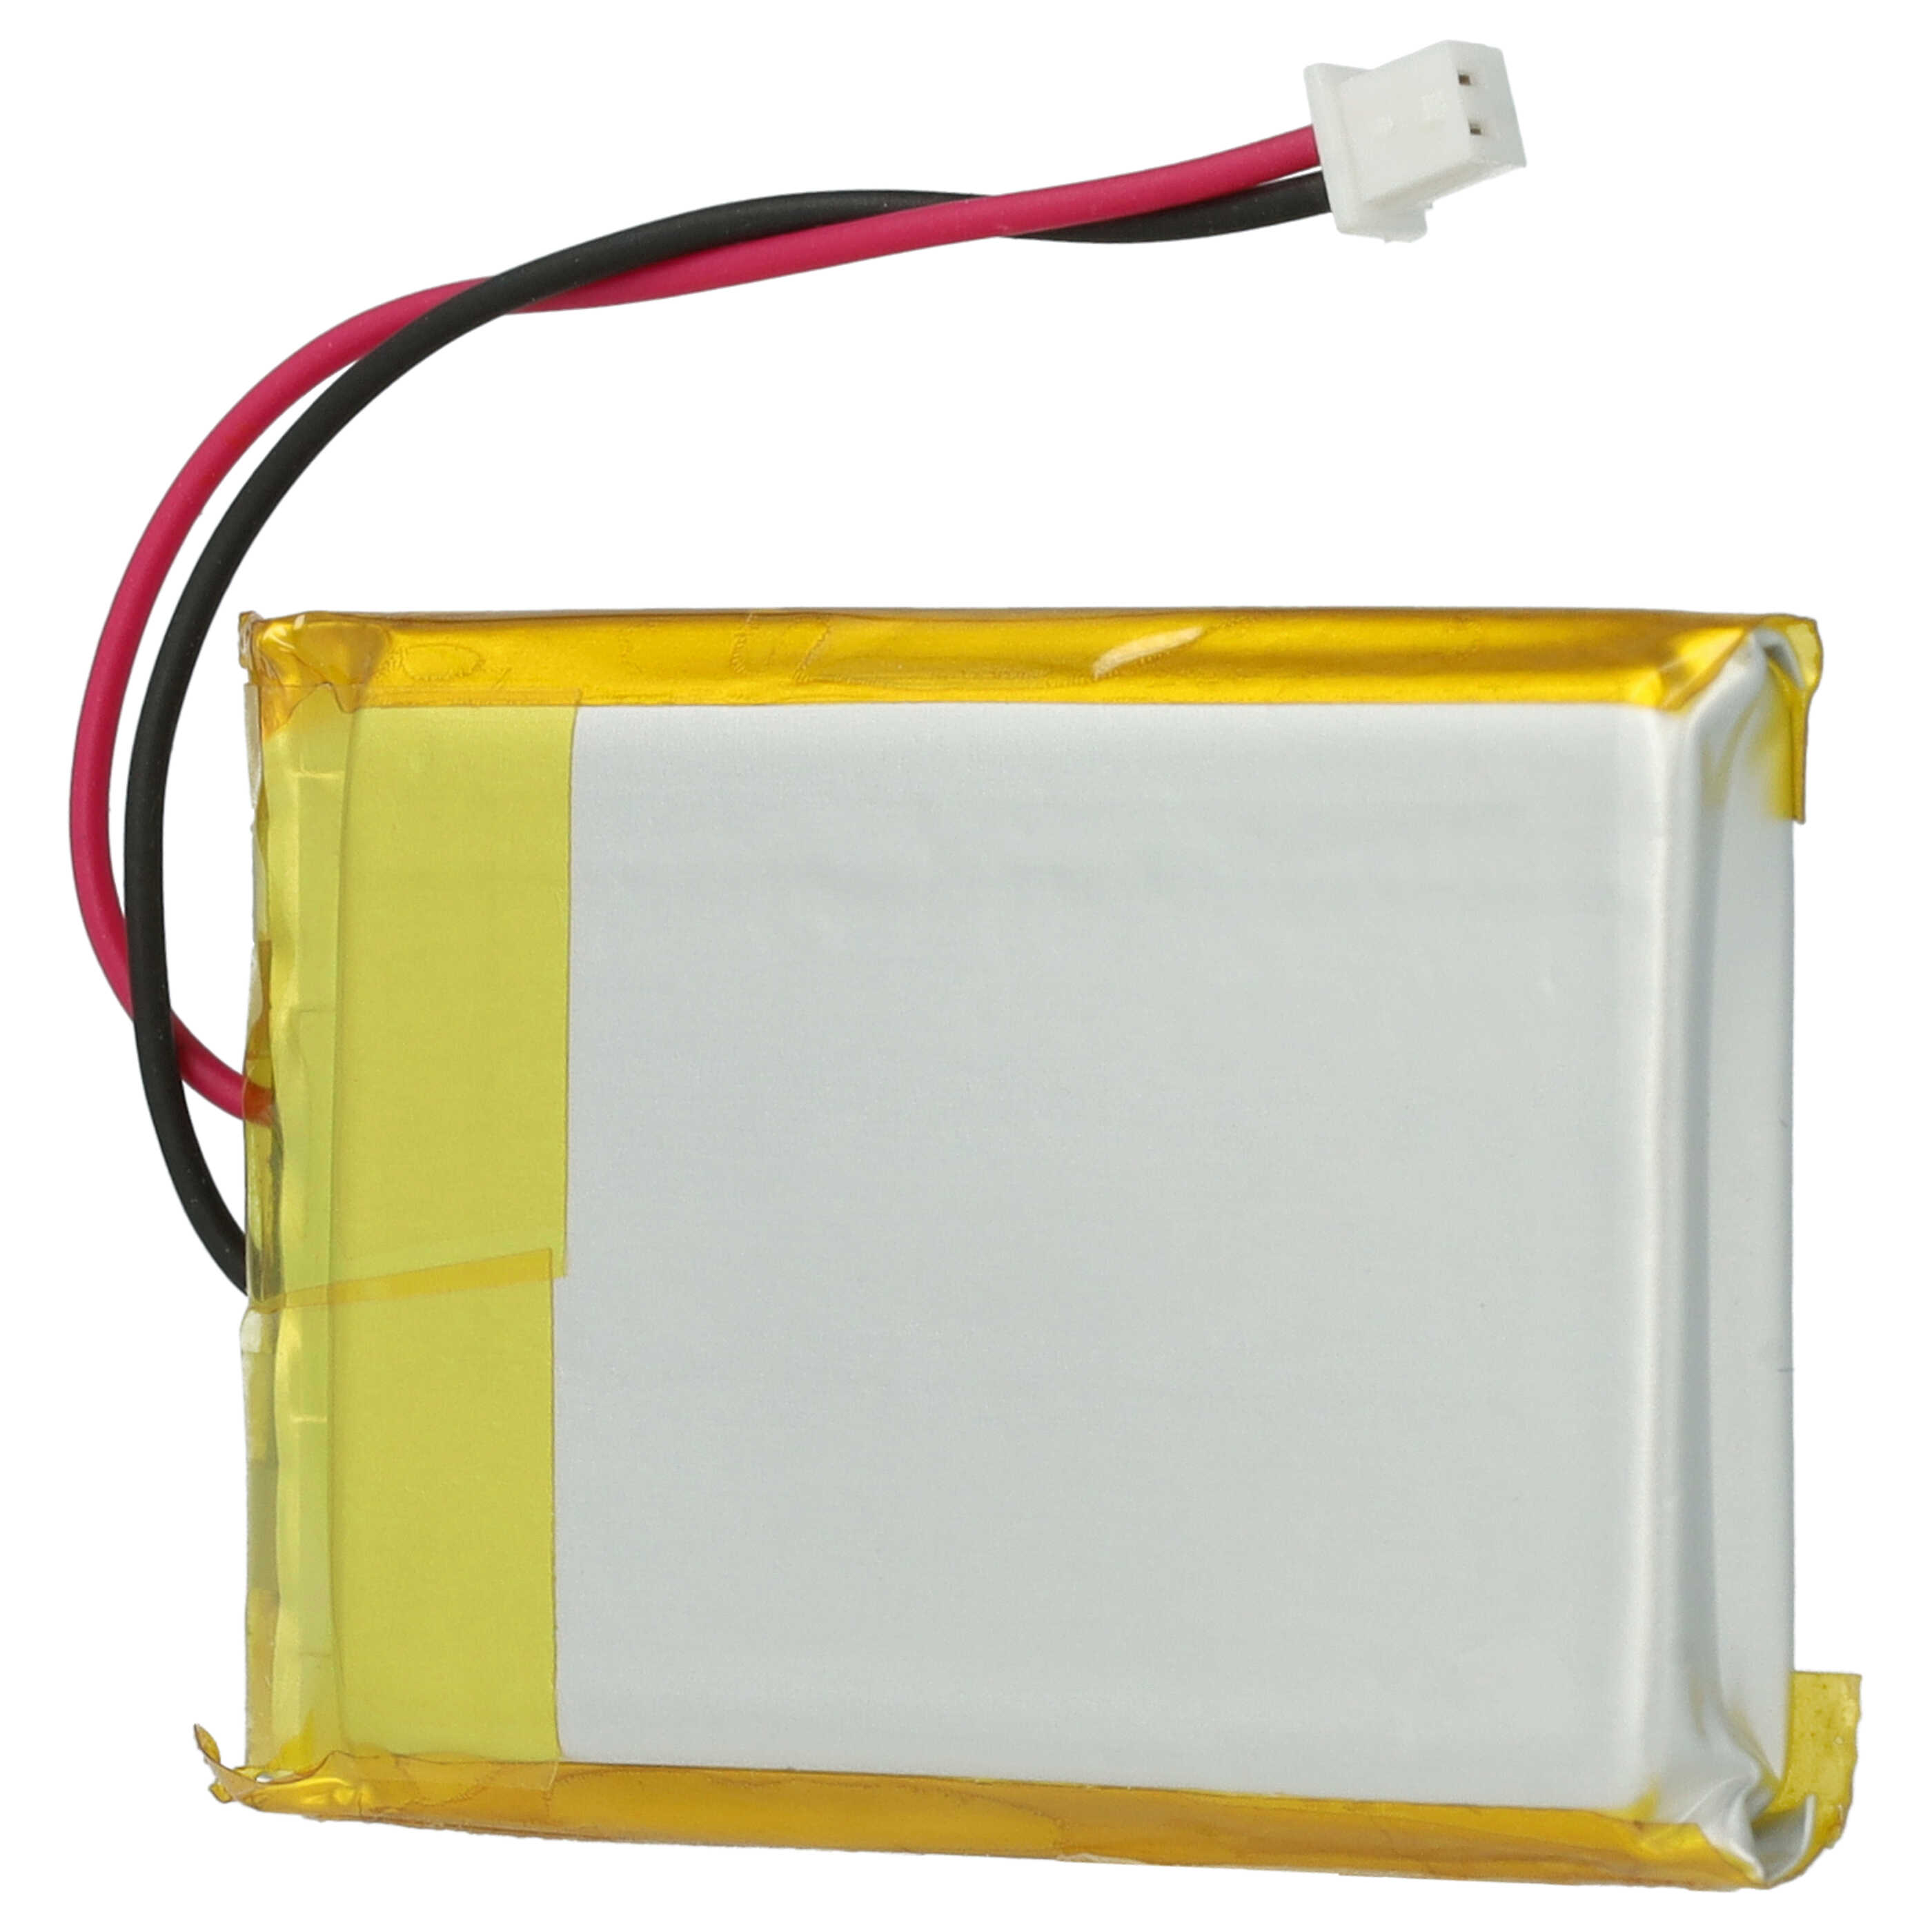 Akumulator do niani elektronicznej zamiennik Sanitas 1ICP6/30/48 - 900 mAh 3,7 V LiPo